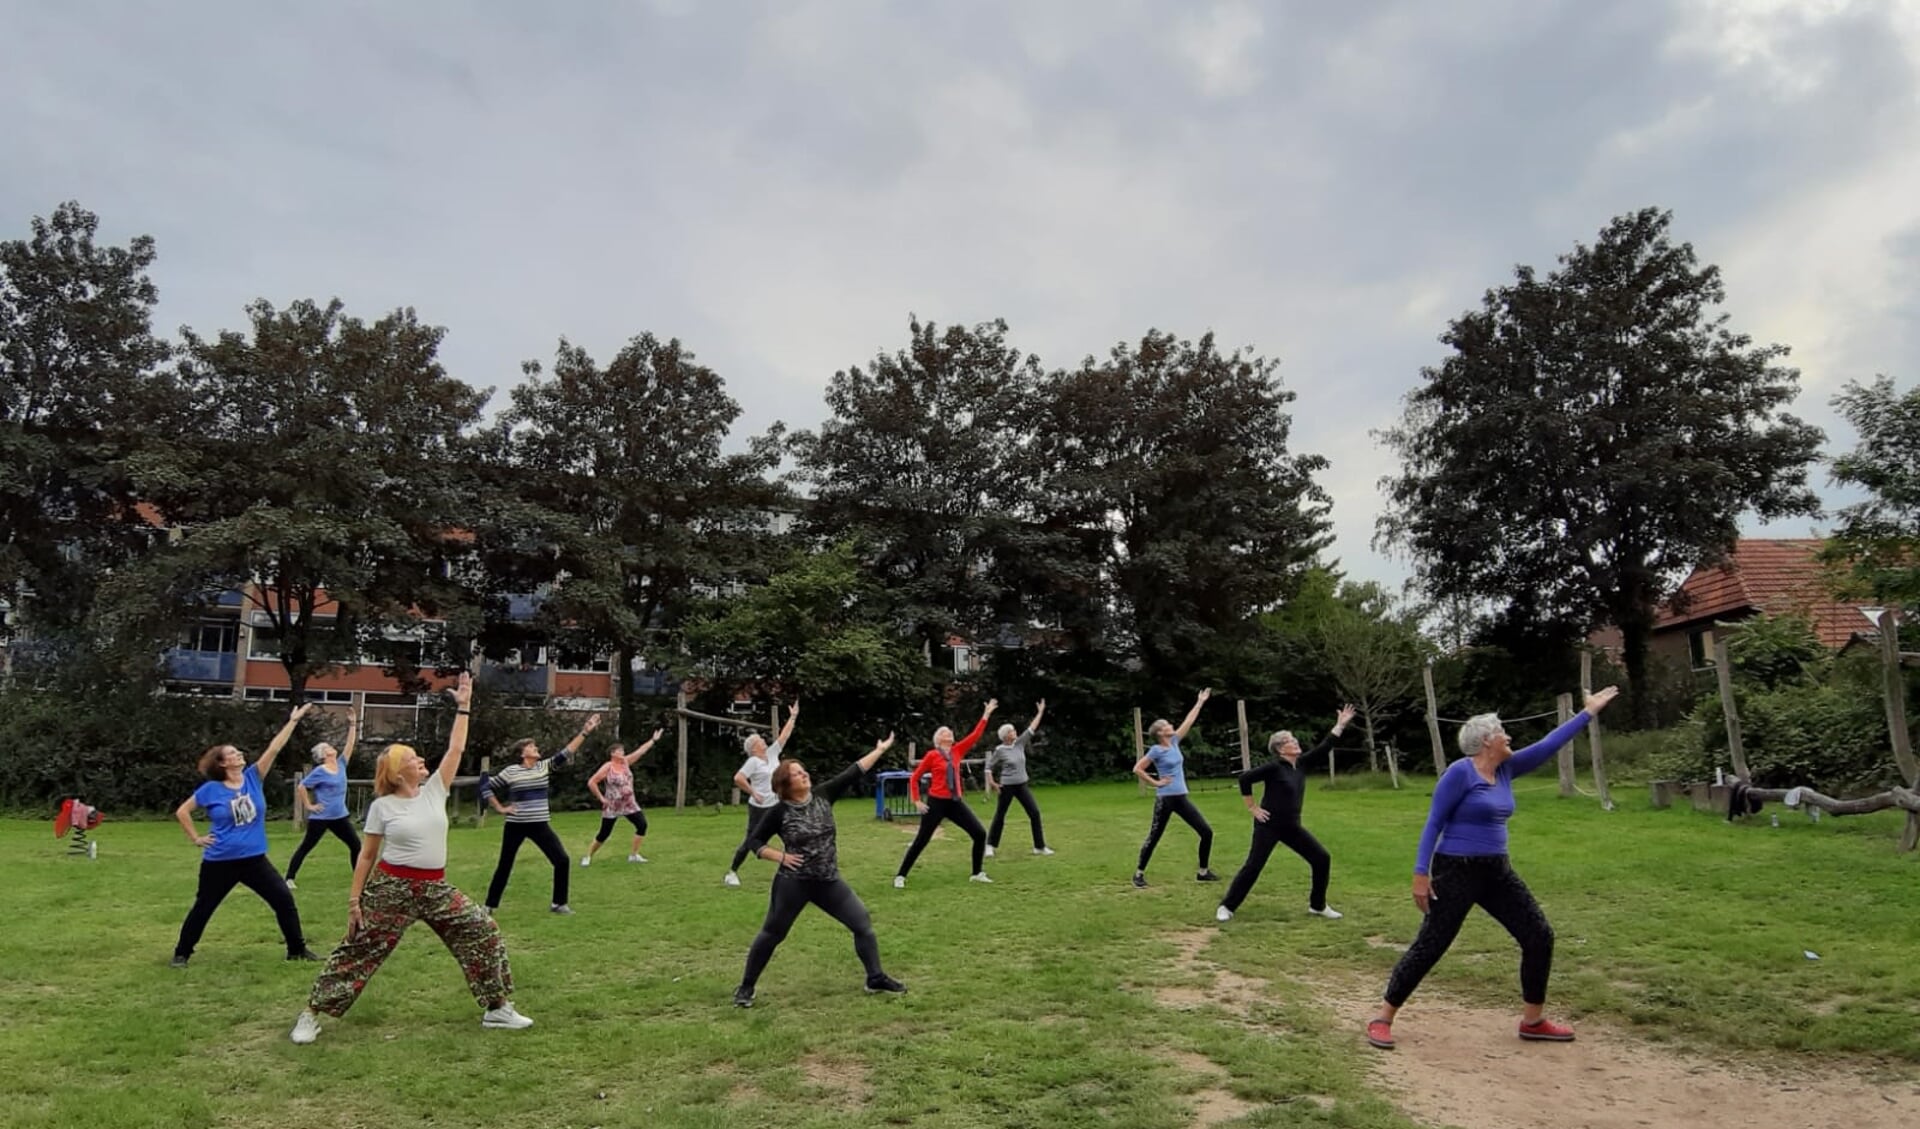 De Dames Dans-Fit groep traint buiten. (foto: Suzanna Wind)